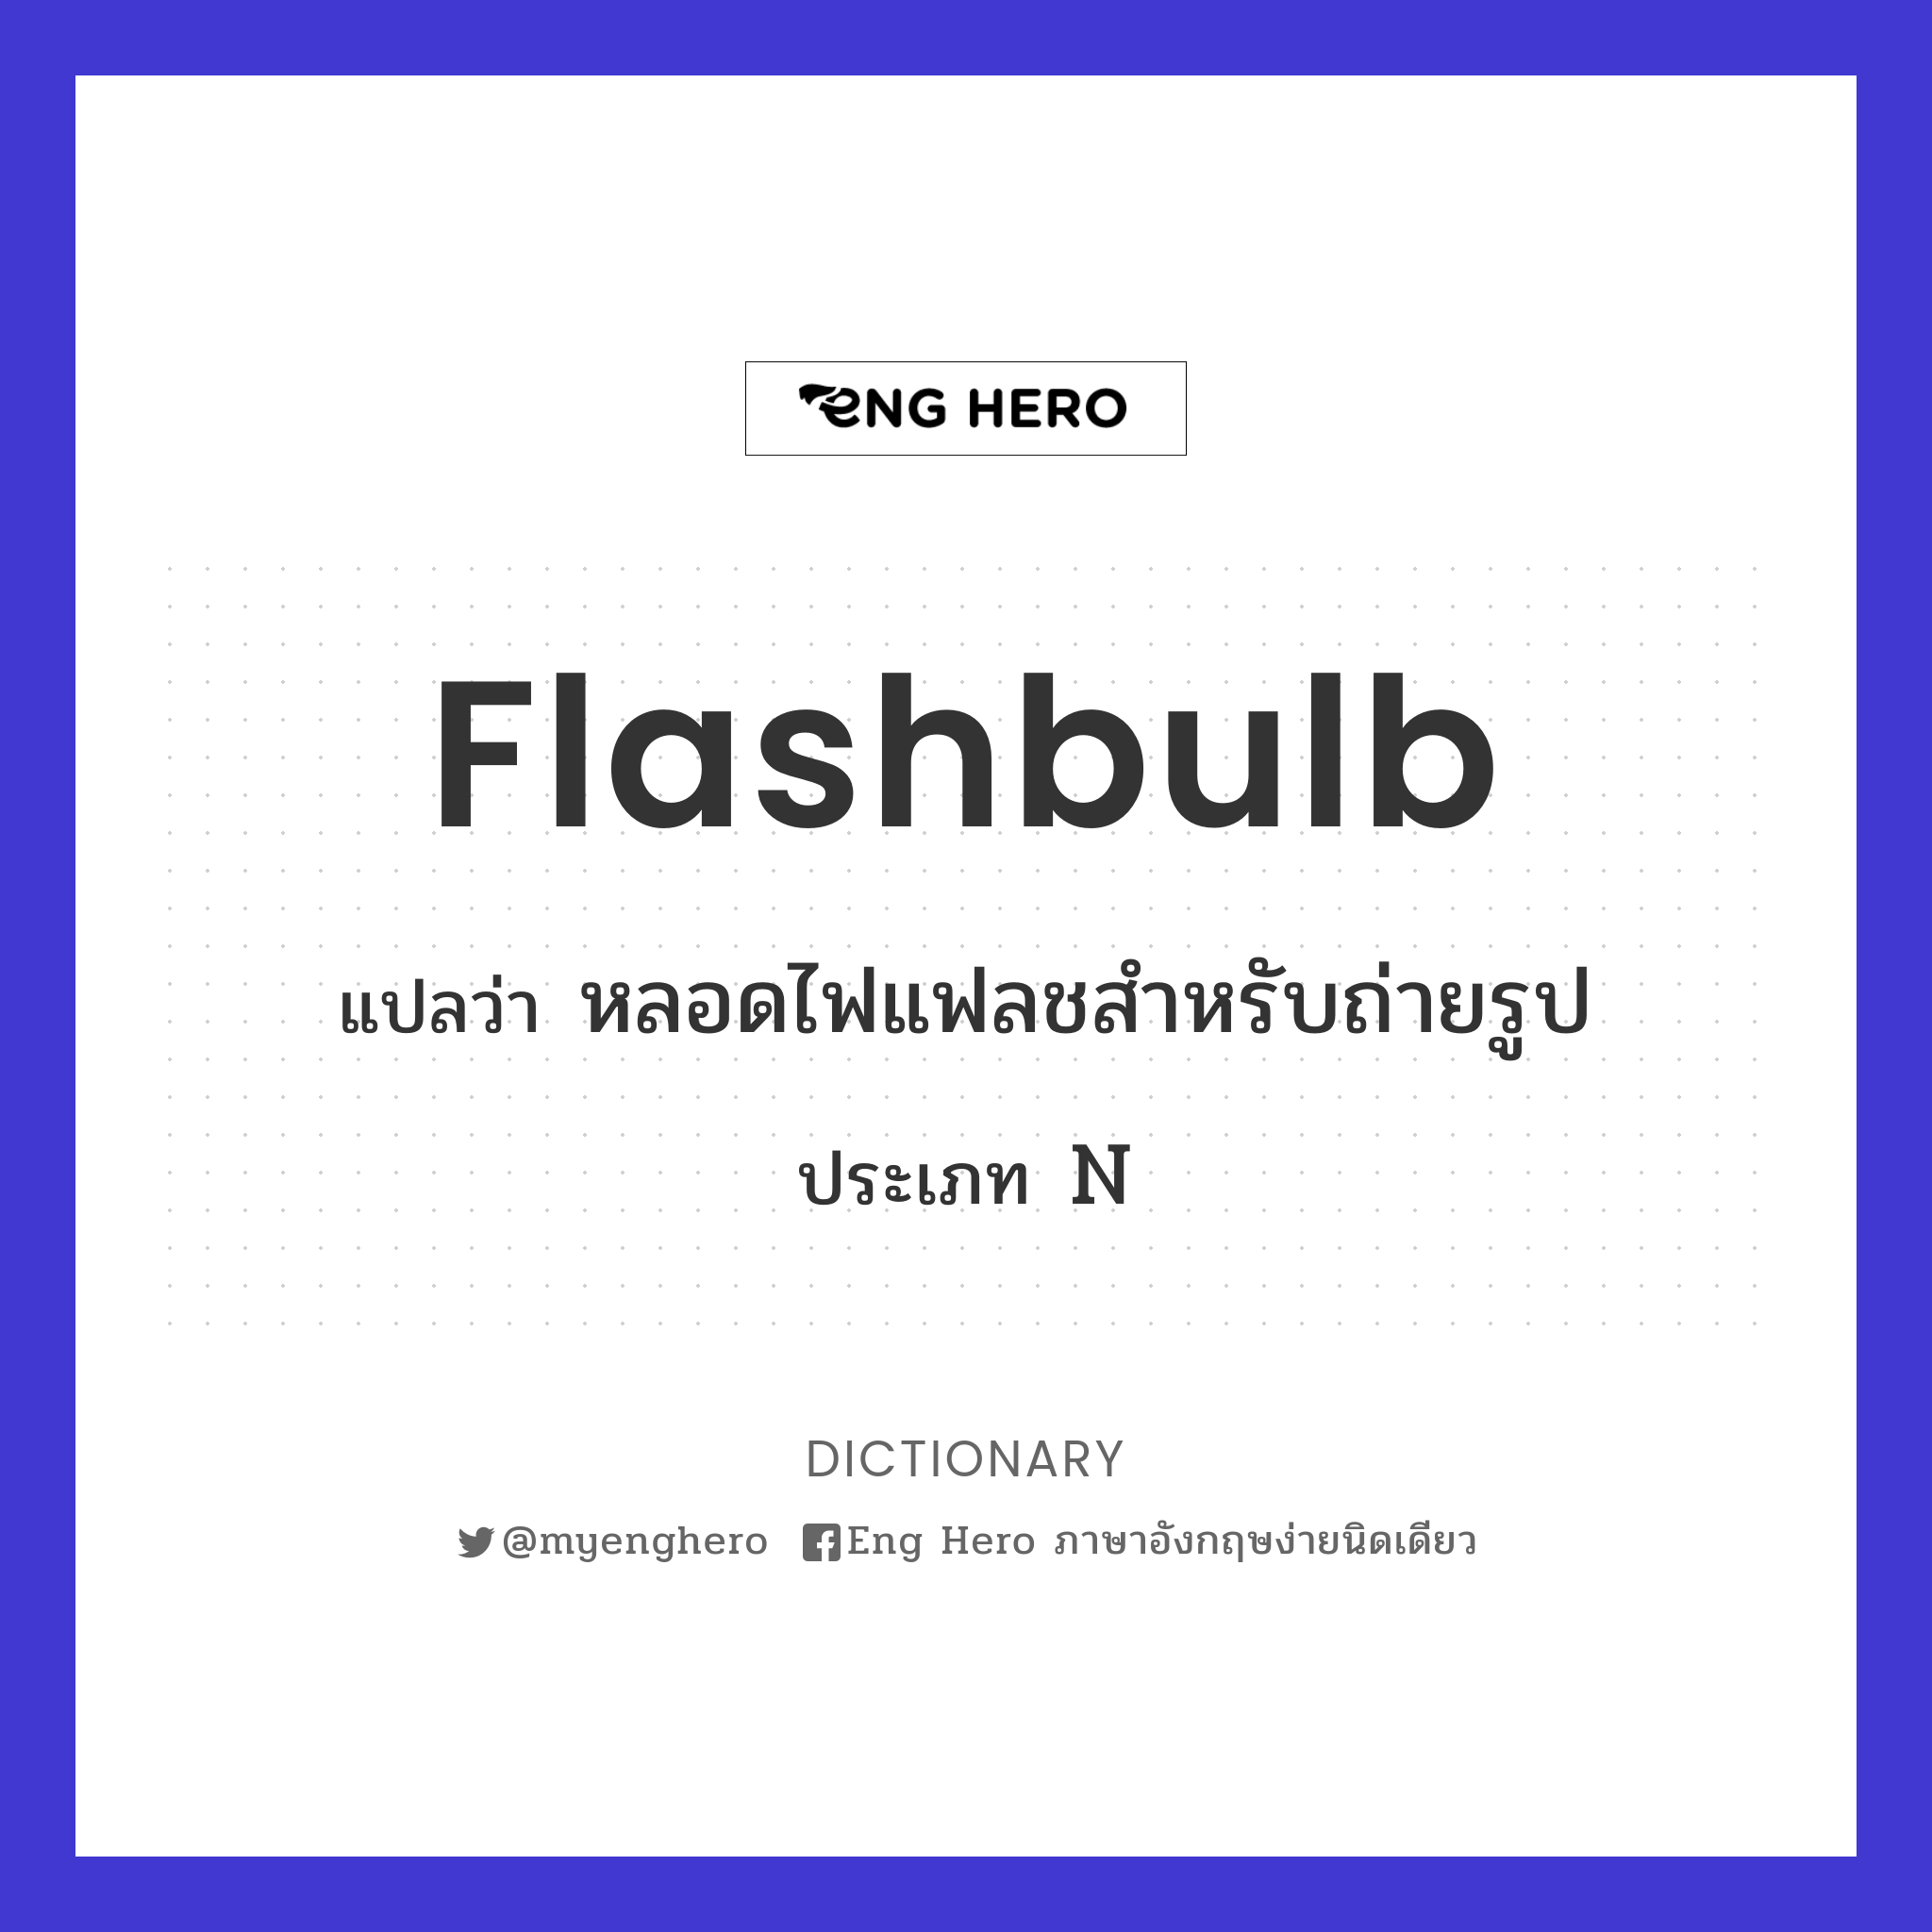 flashbulb